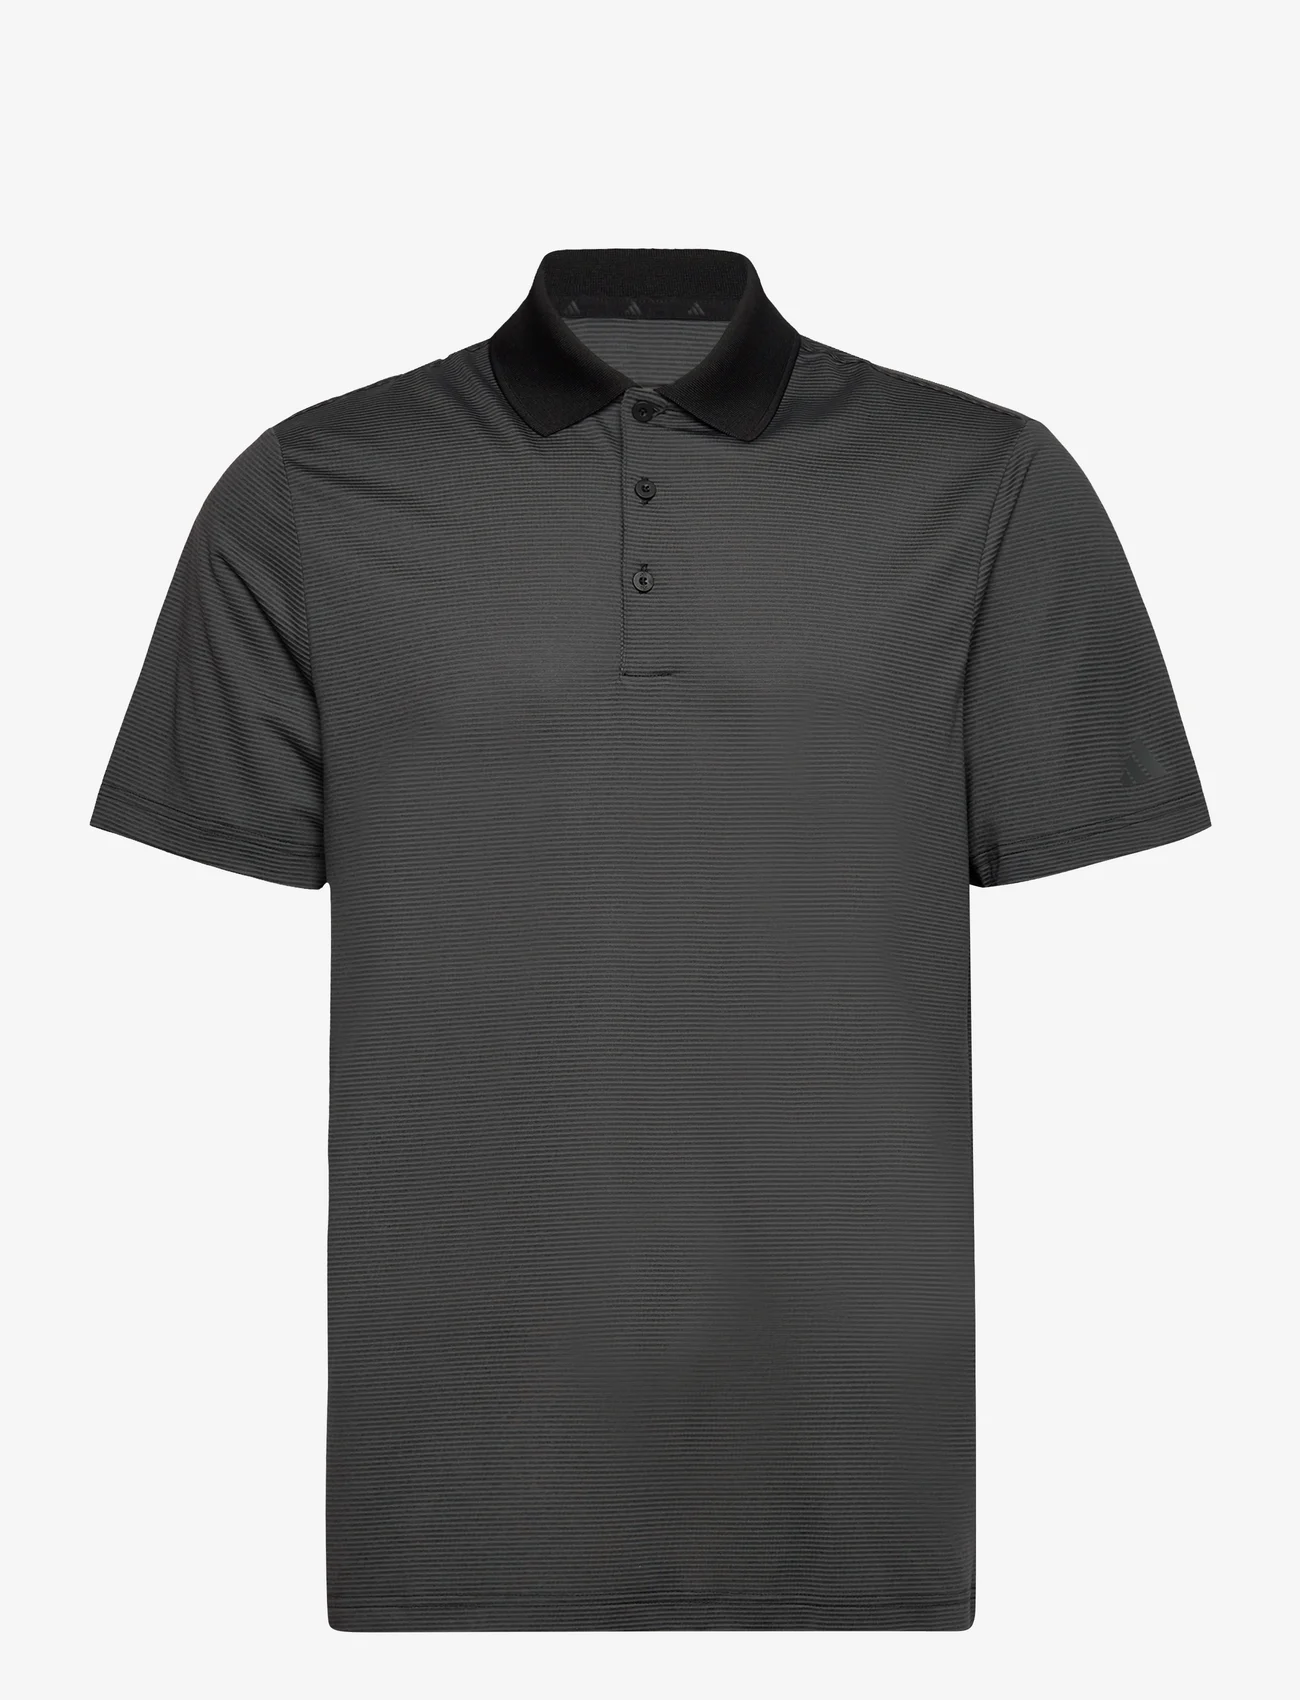 adidas Golf - OTTOMAN POLO - kurzärmelig - black/gresix - 0